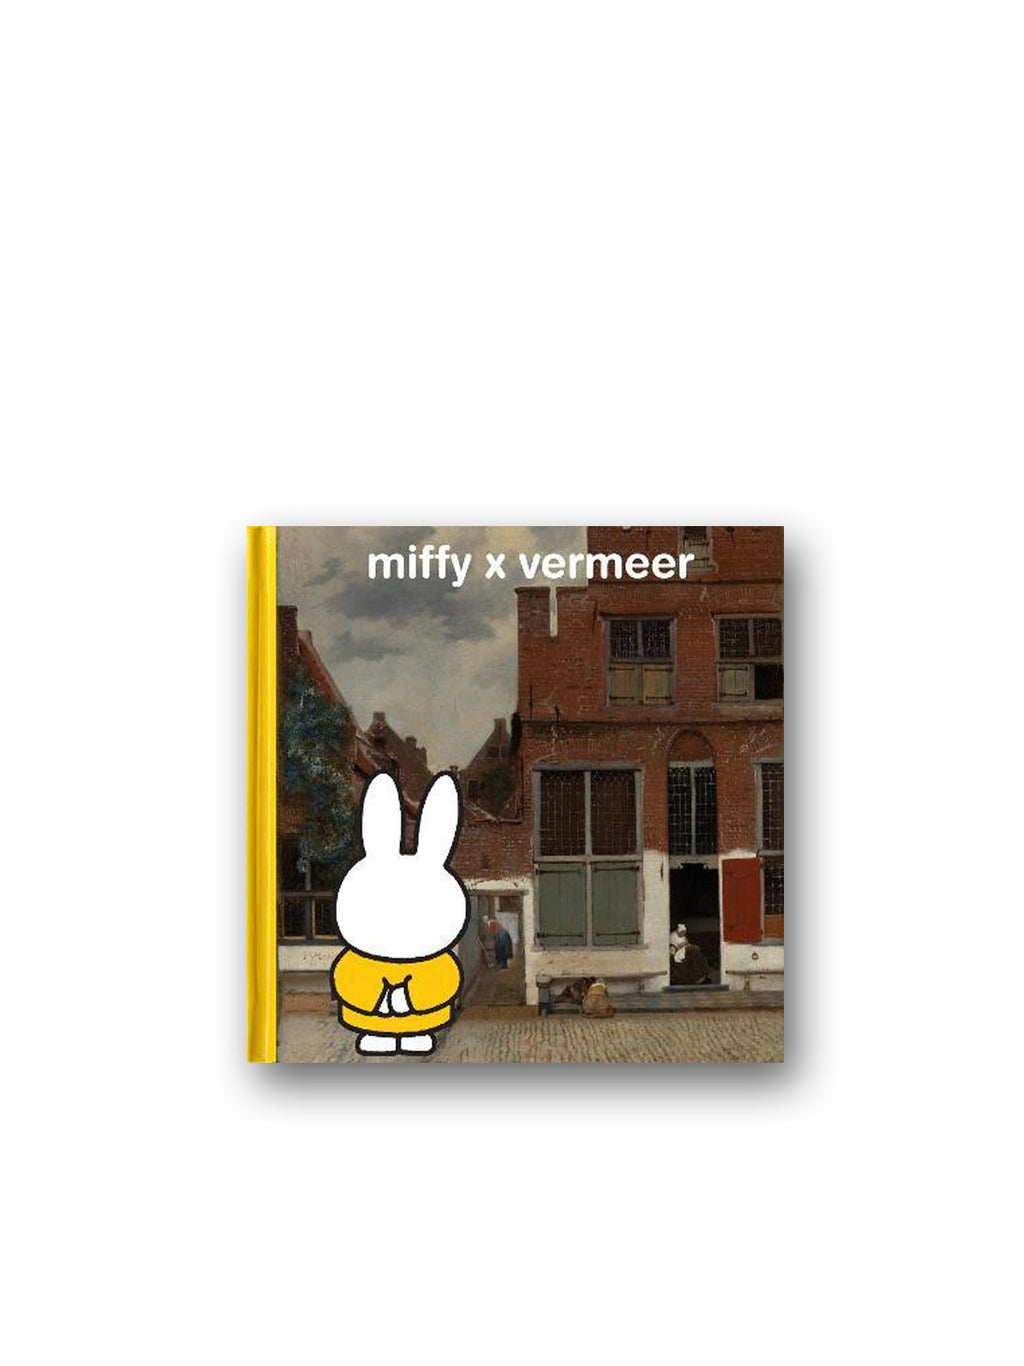 miffy x vermeer